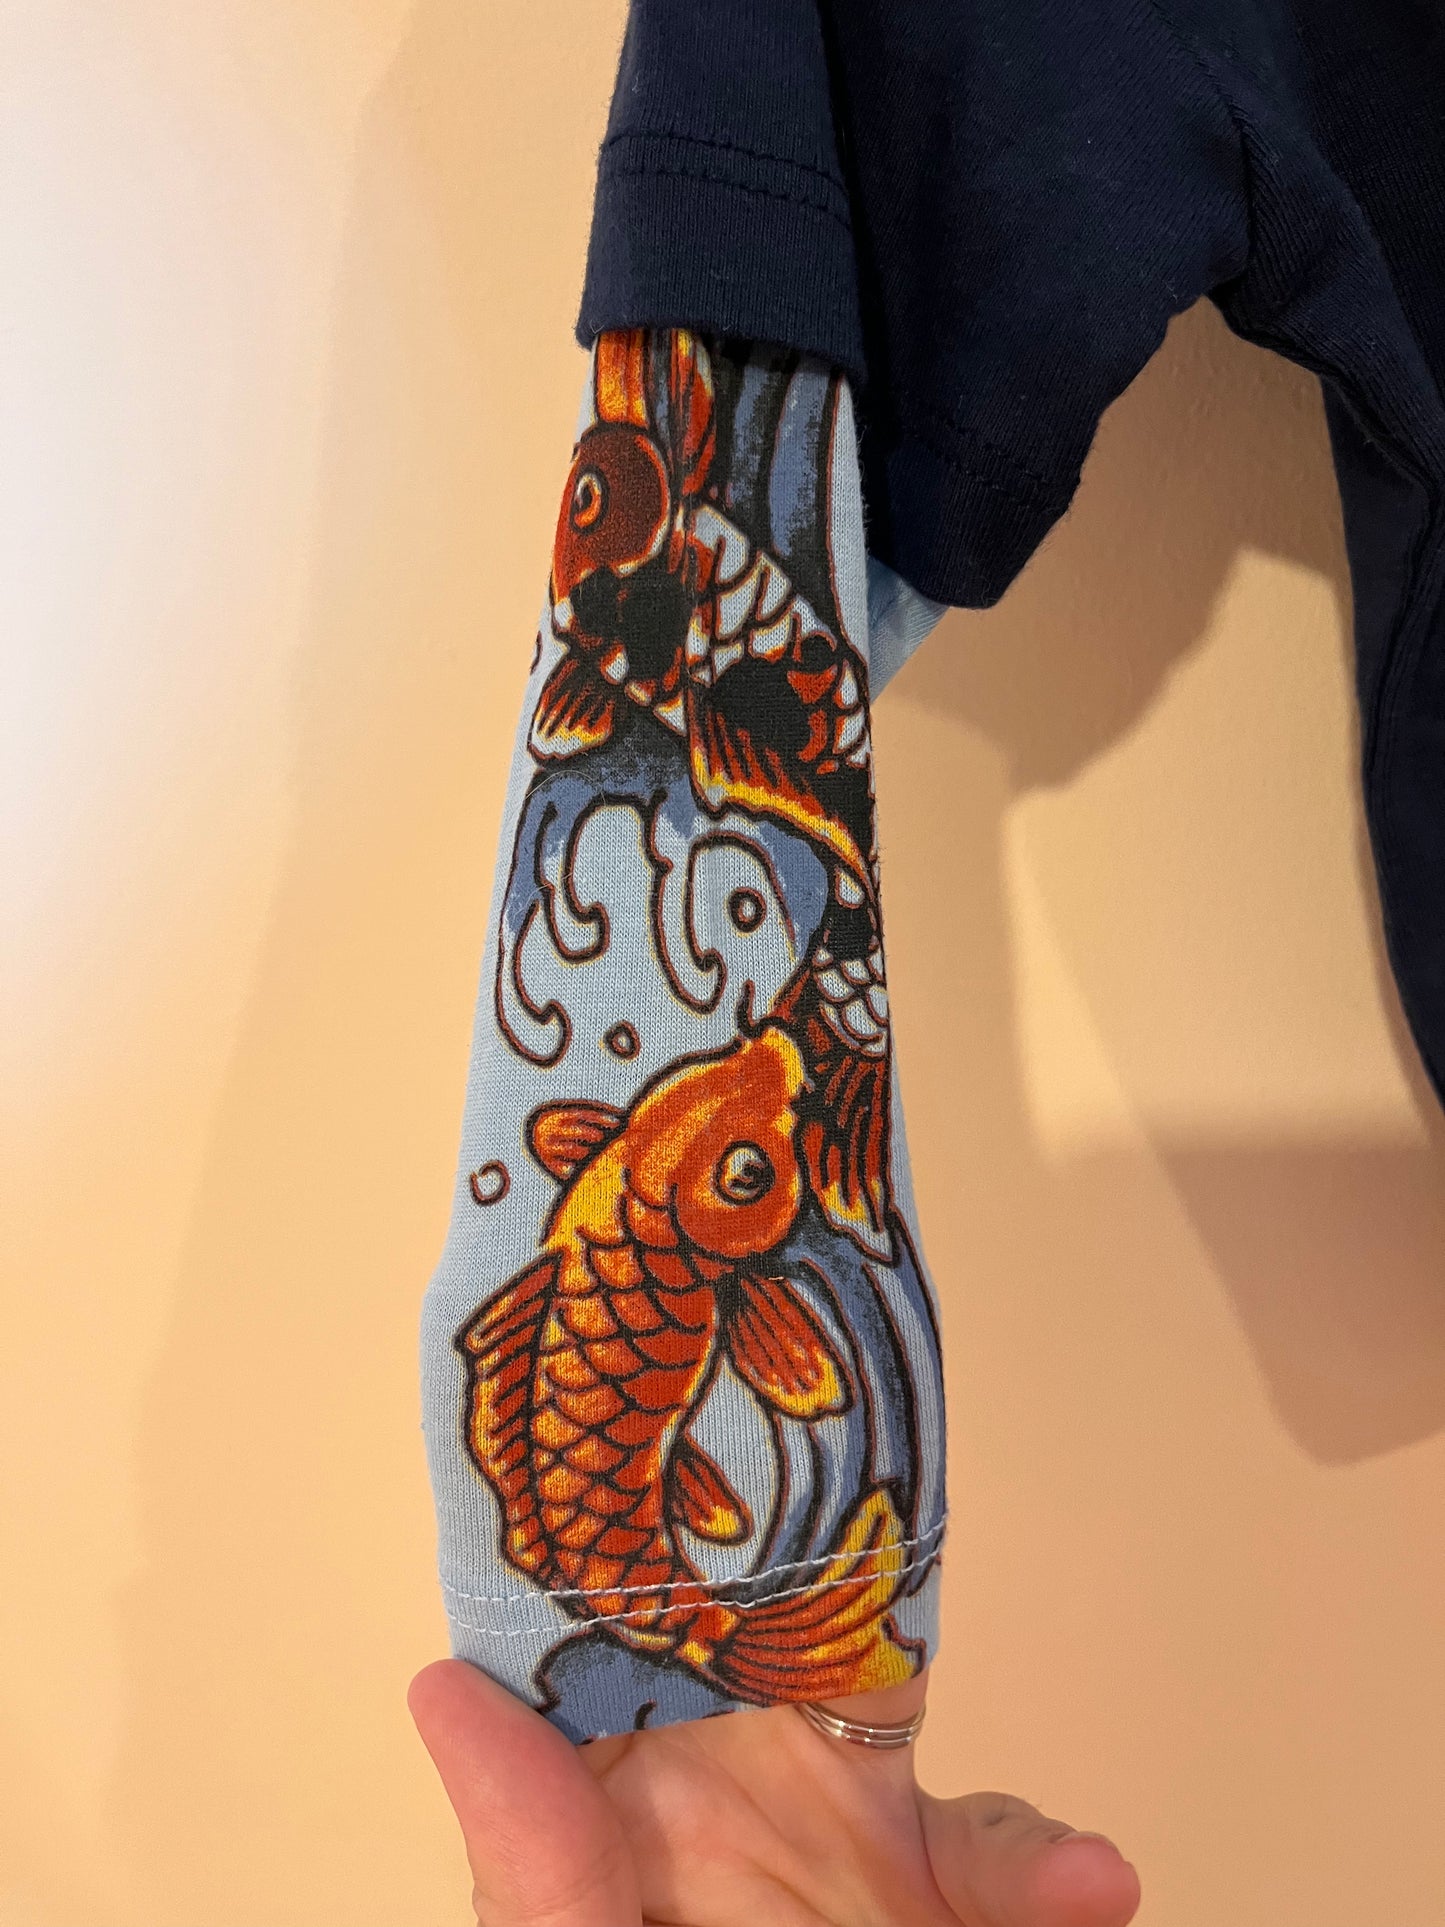 NEW! City Threads Tattoo Sleeve Shark Long-Sleeve (12-18)